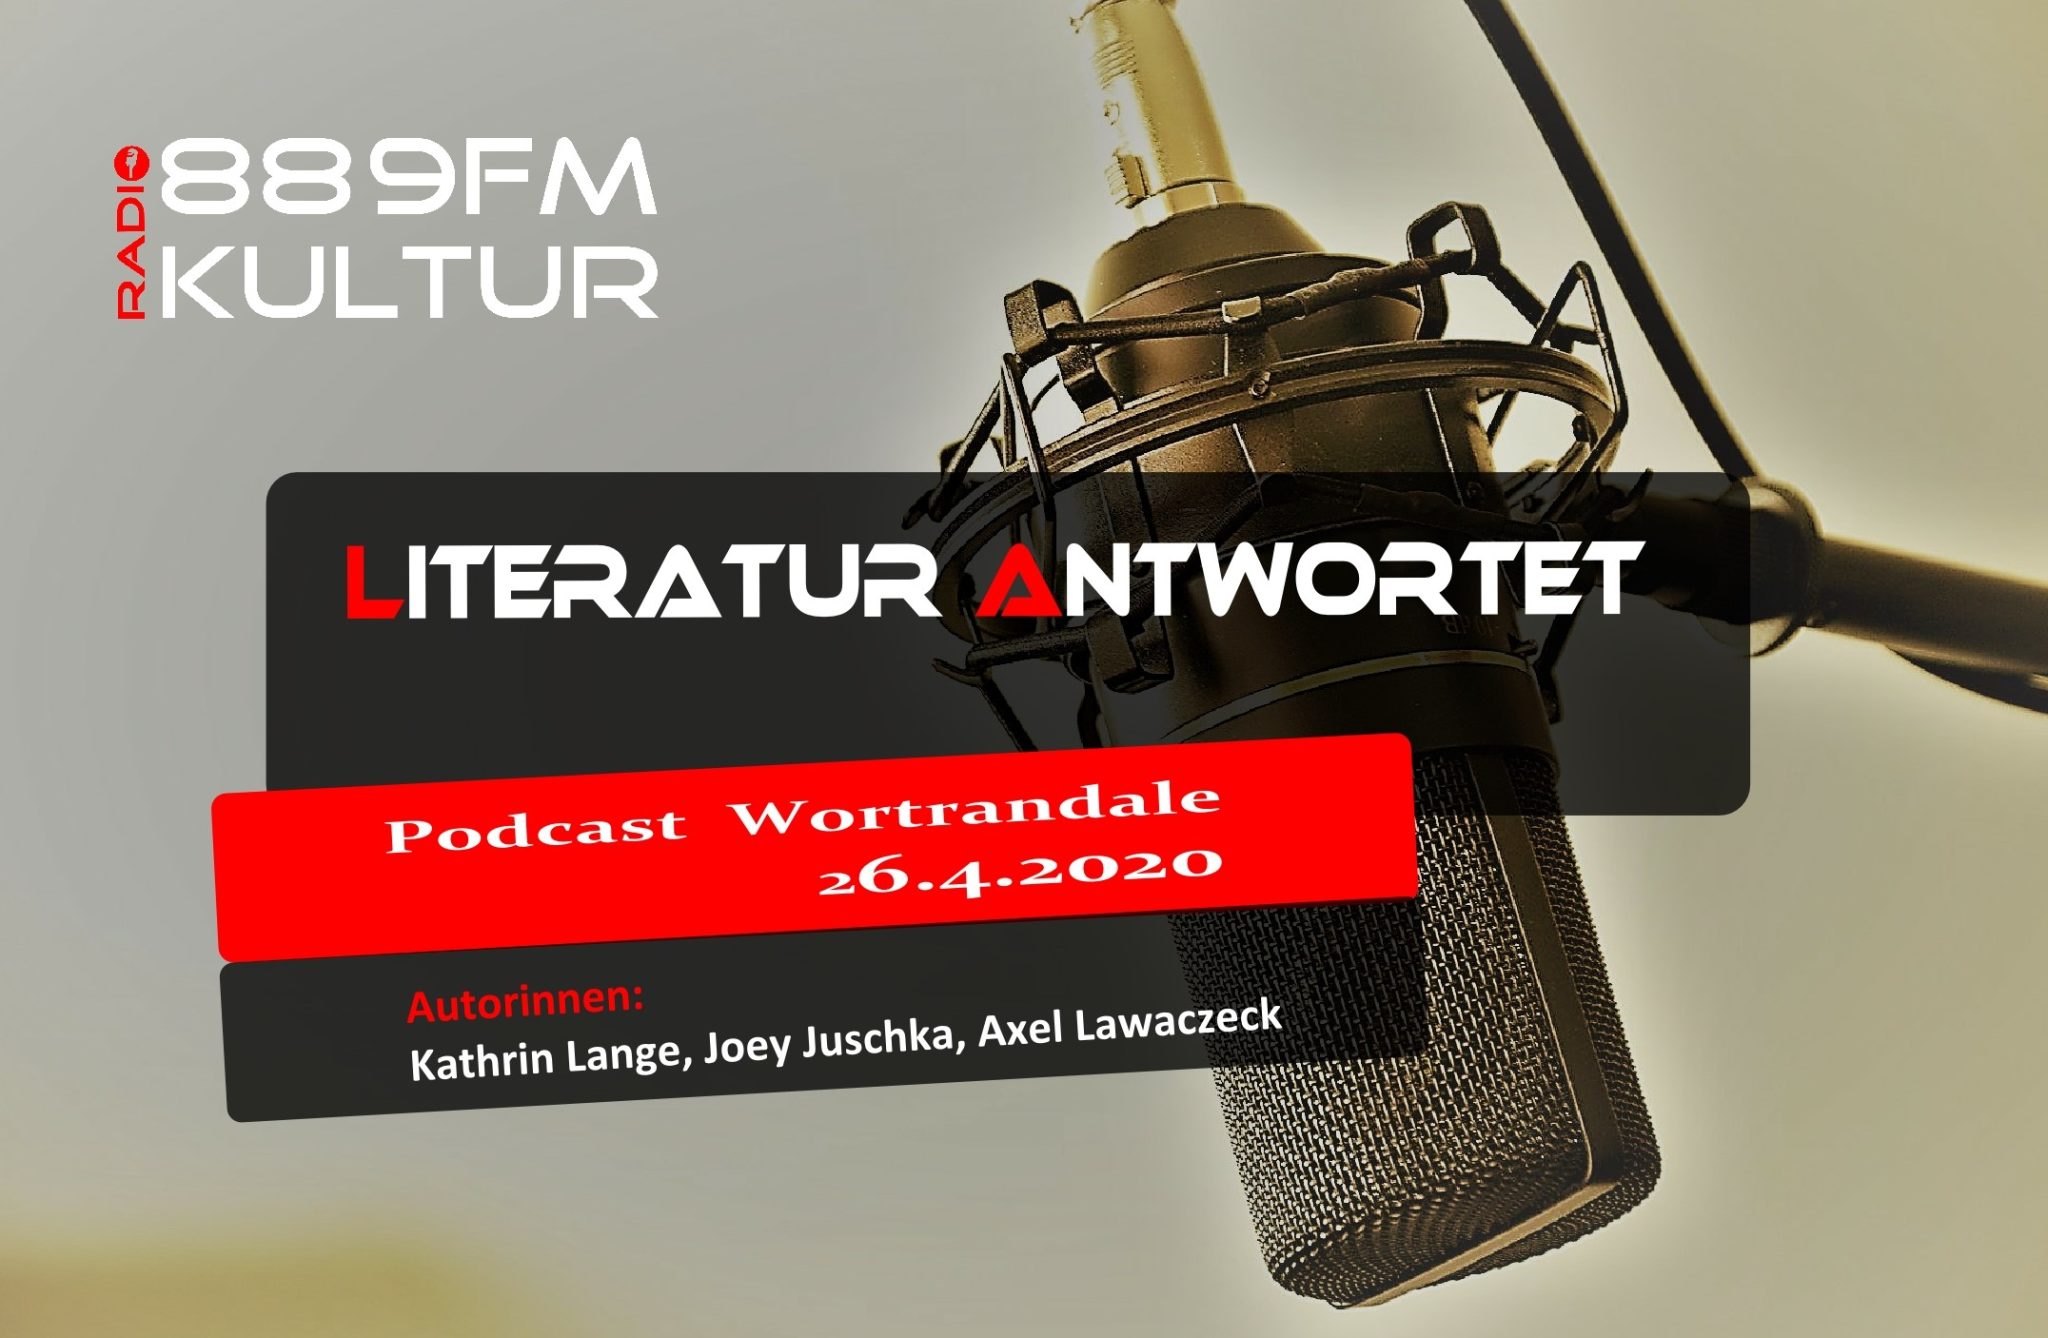 889FM Kultur, Radio 889FM